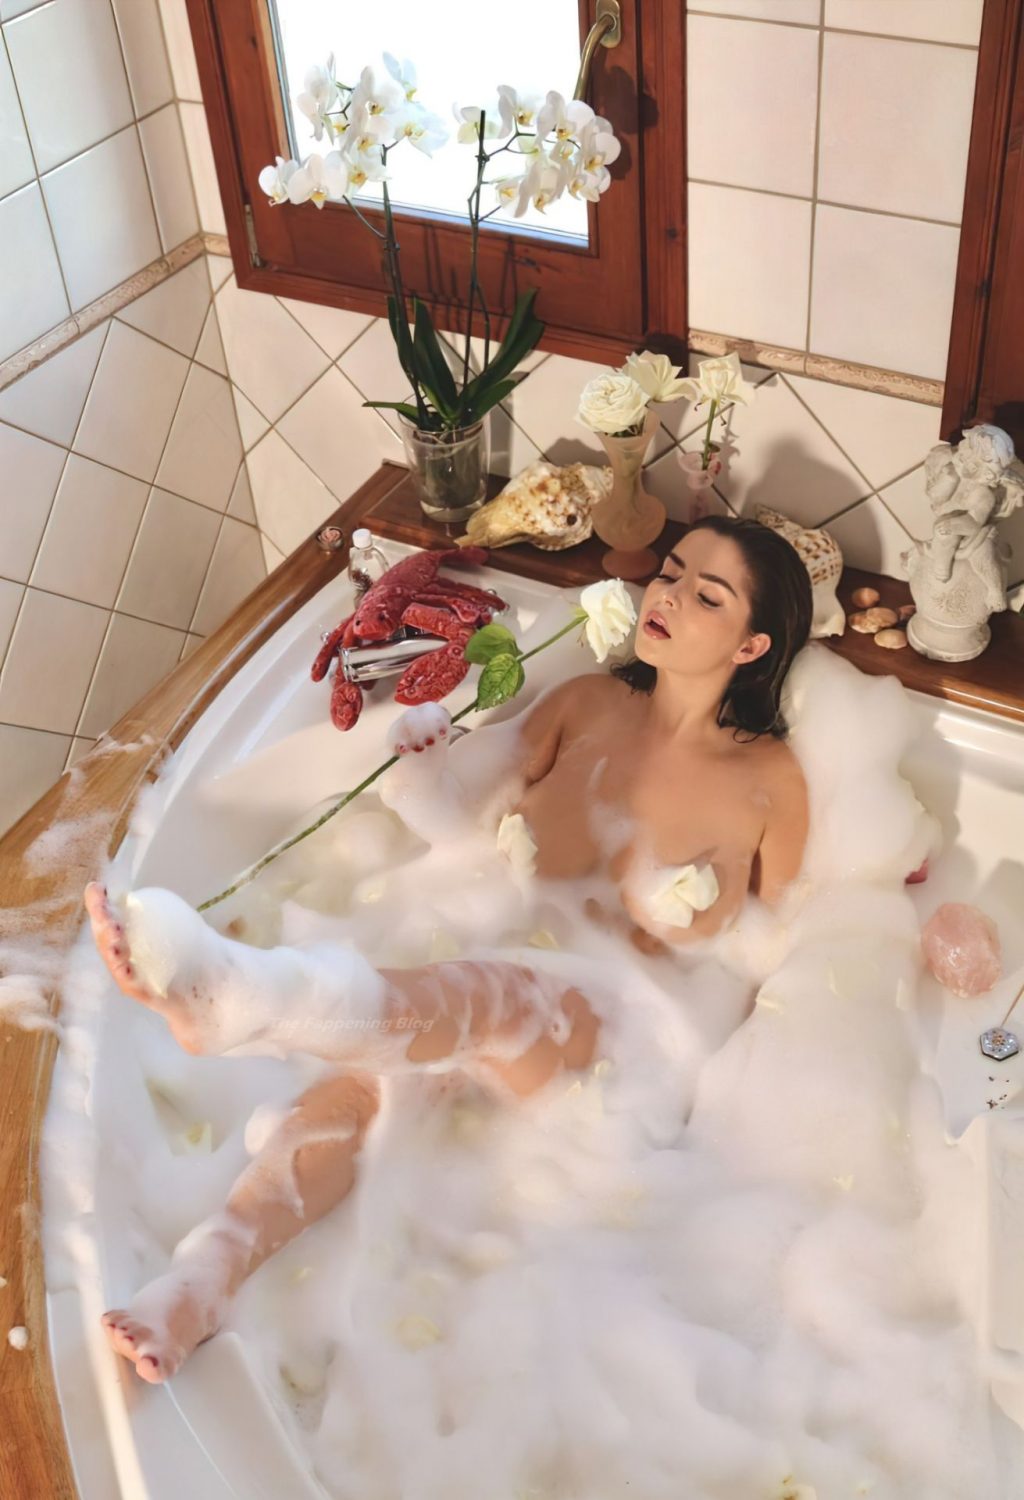 Demi Rose Mawby Nude (7 Photos)